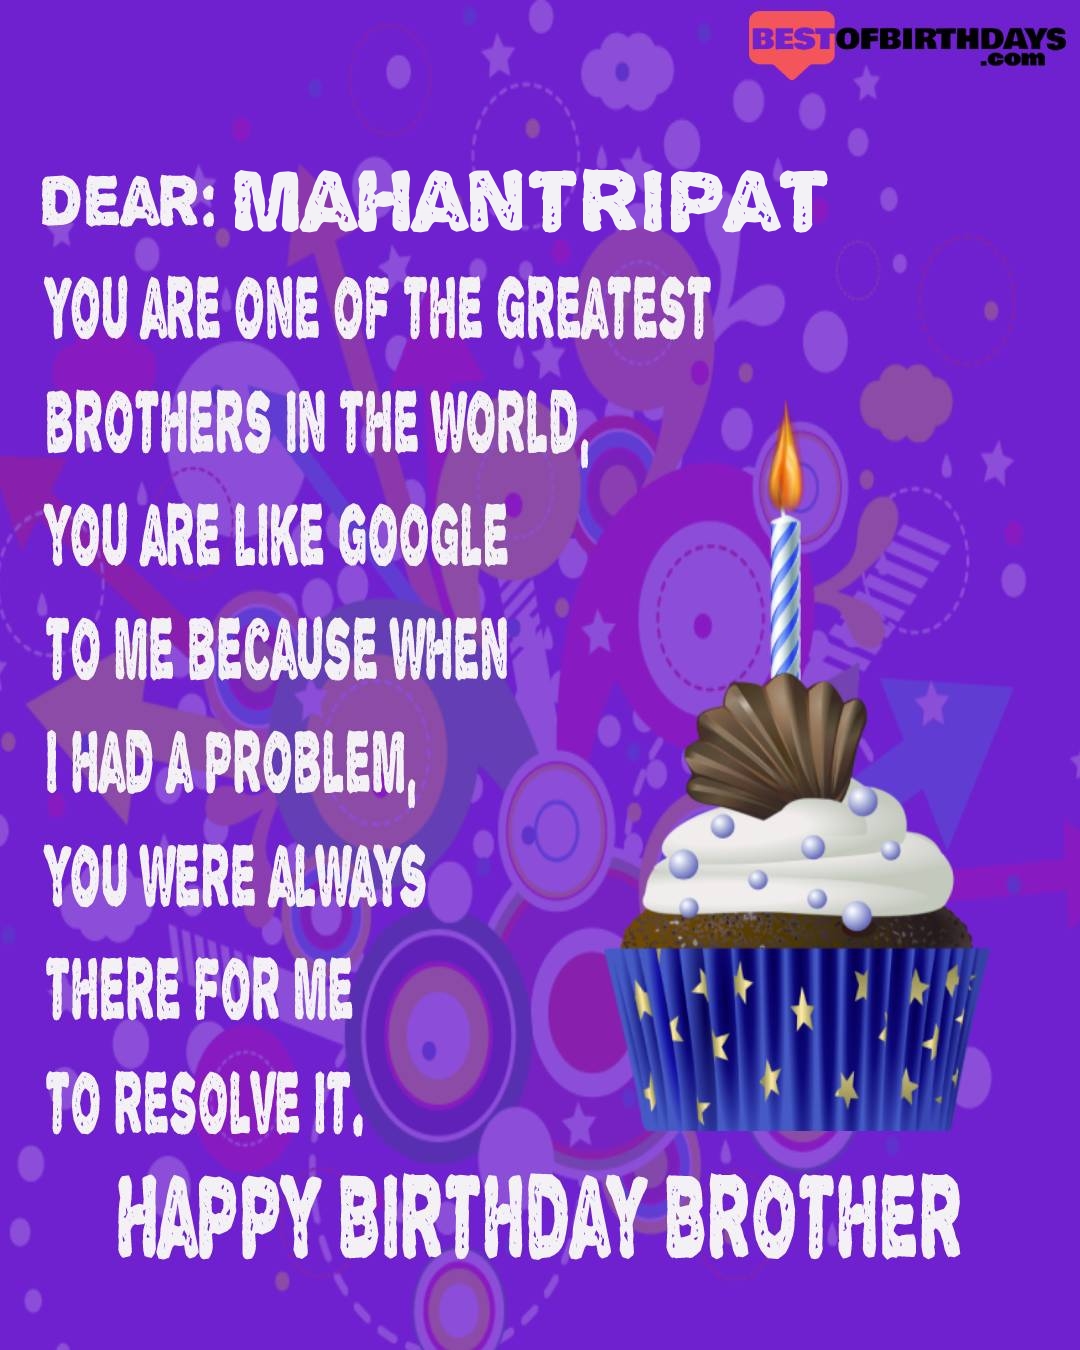 Happy birthday mahantripat bhai brother bro